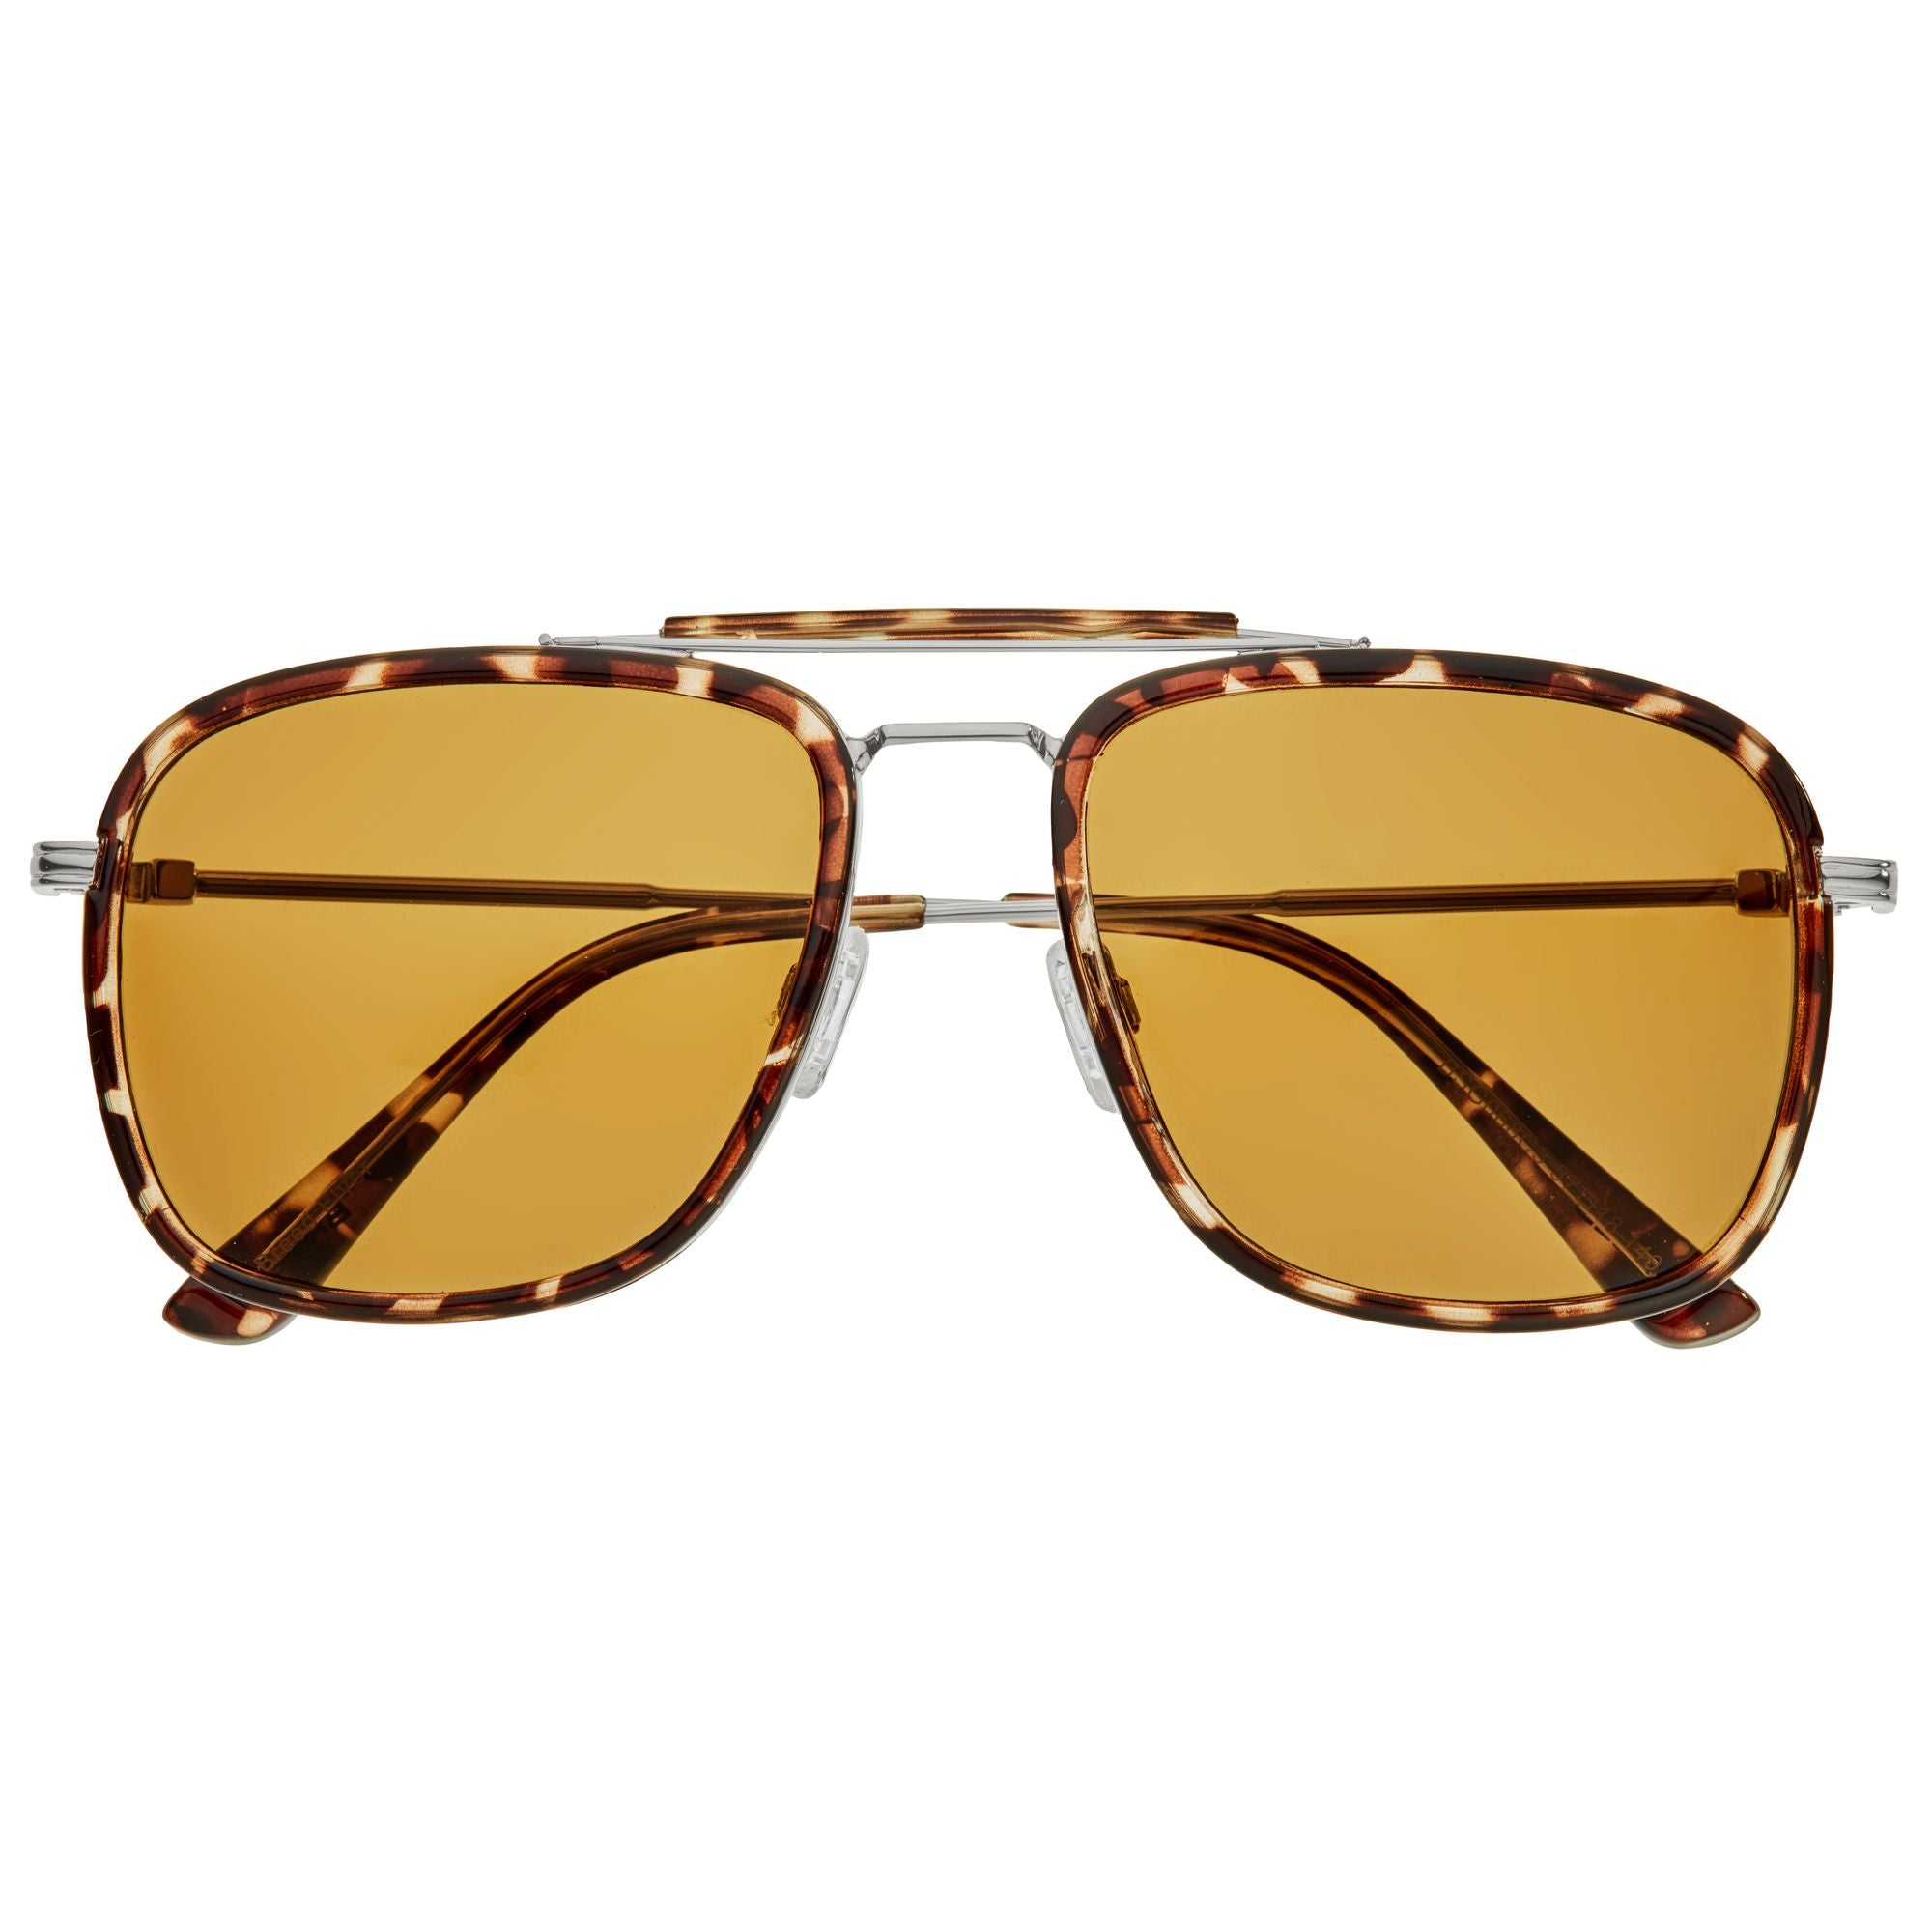 Breed Flyer Polarized Sunglasses - Tortoise/Brown - BSG068C3